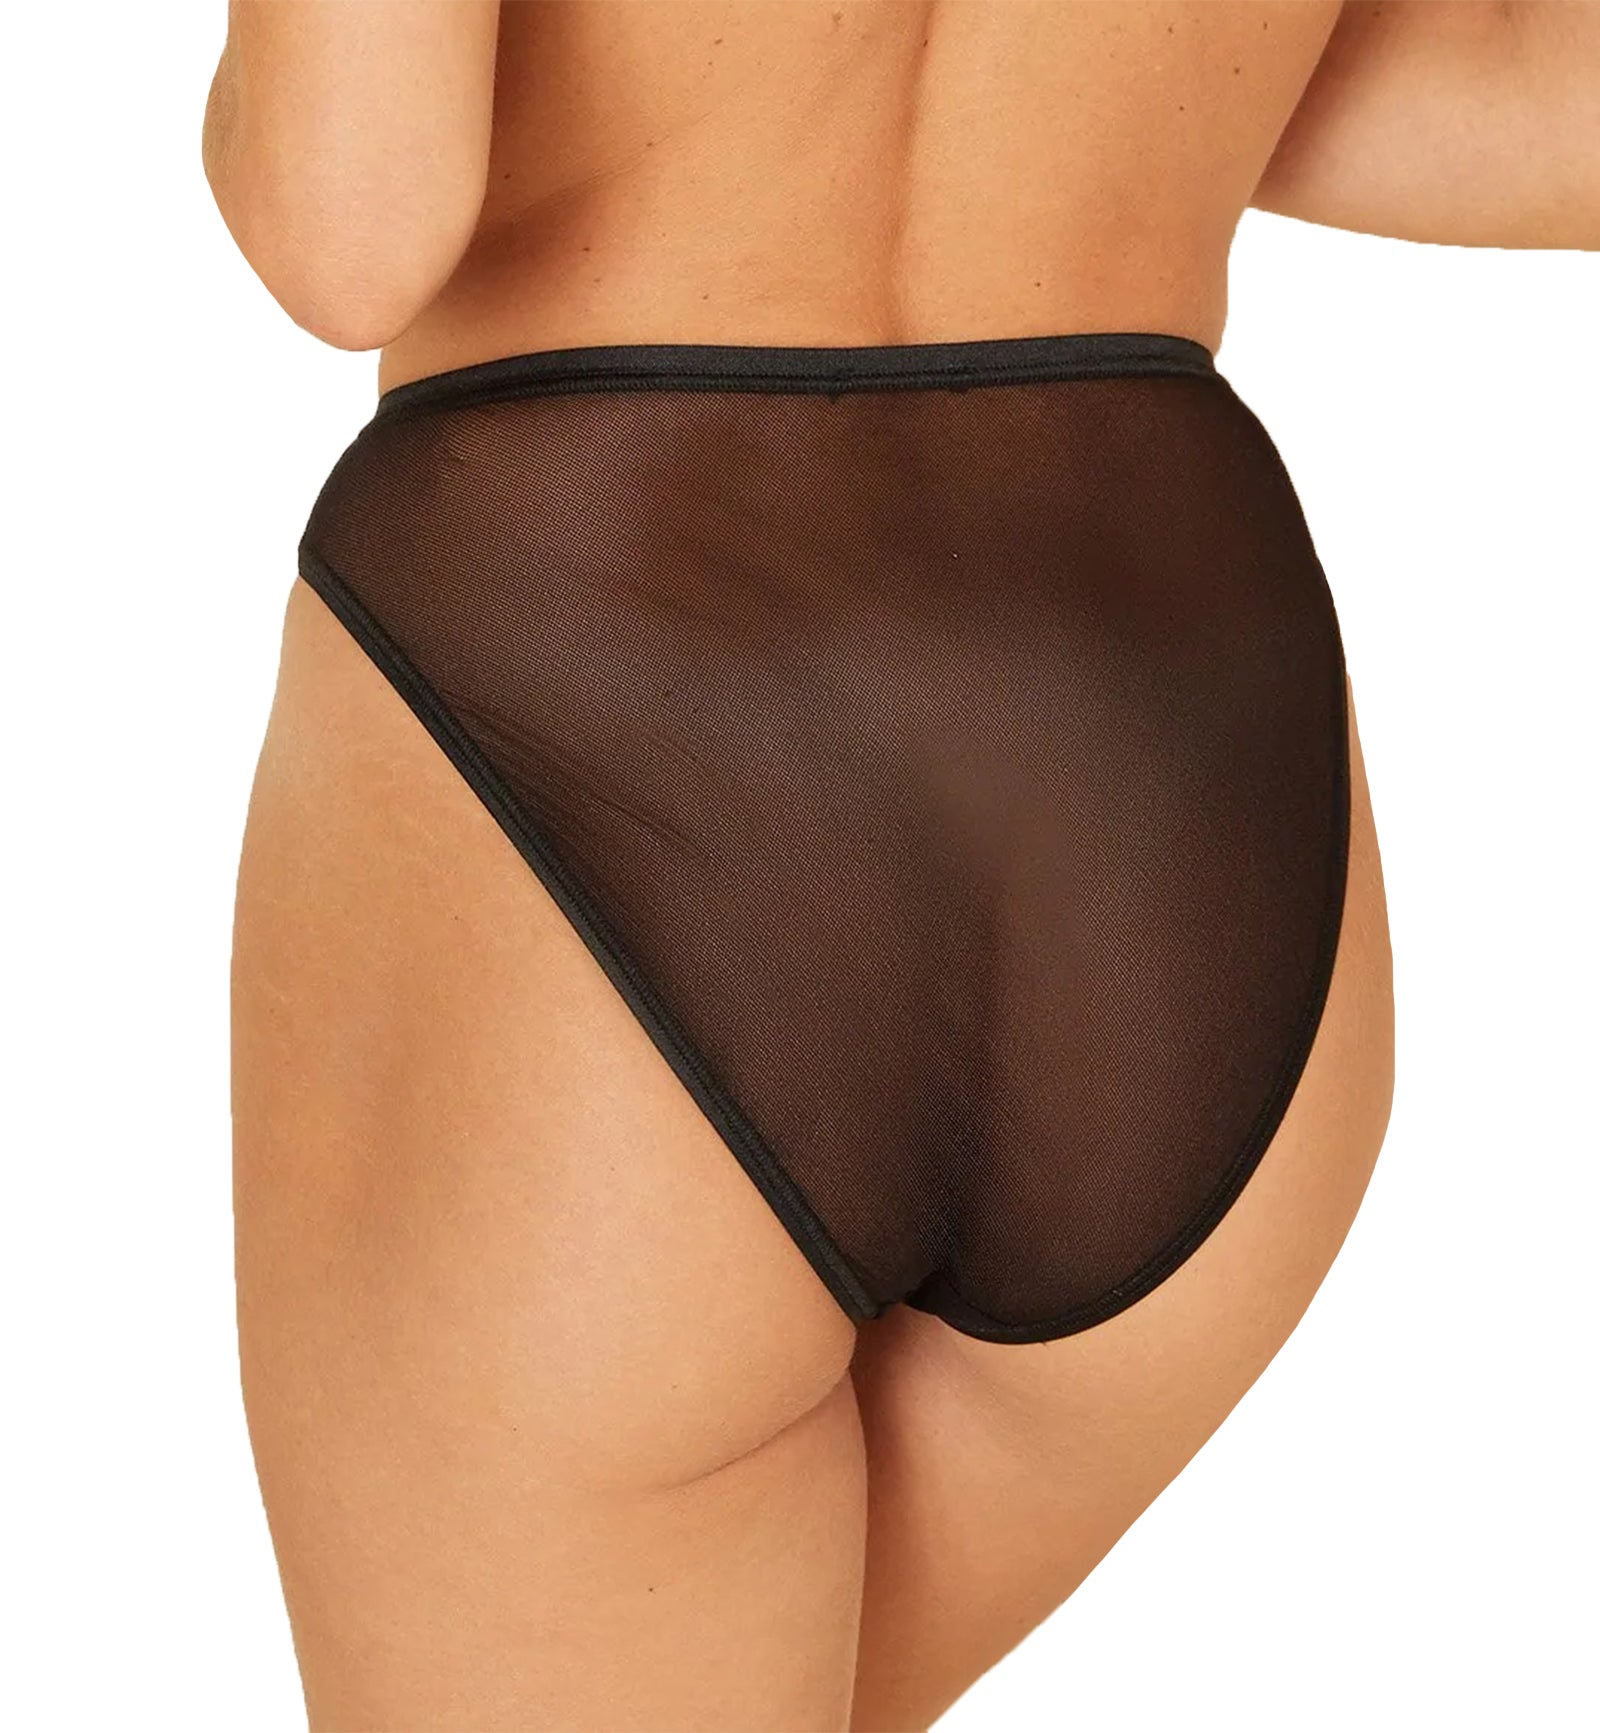 Cosabella Soire Confidence High Waist Bikini Panty (SOIRC0561),Small,Black - Black,Small